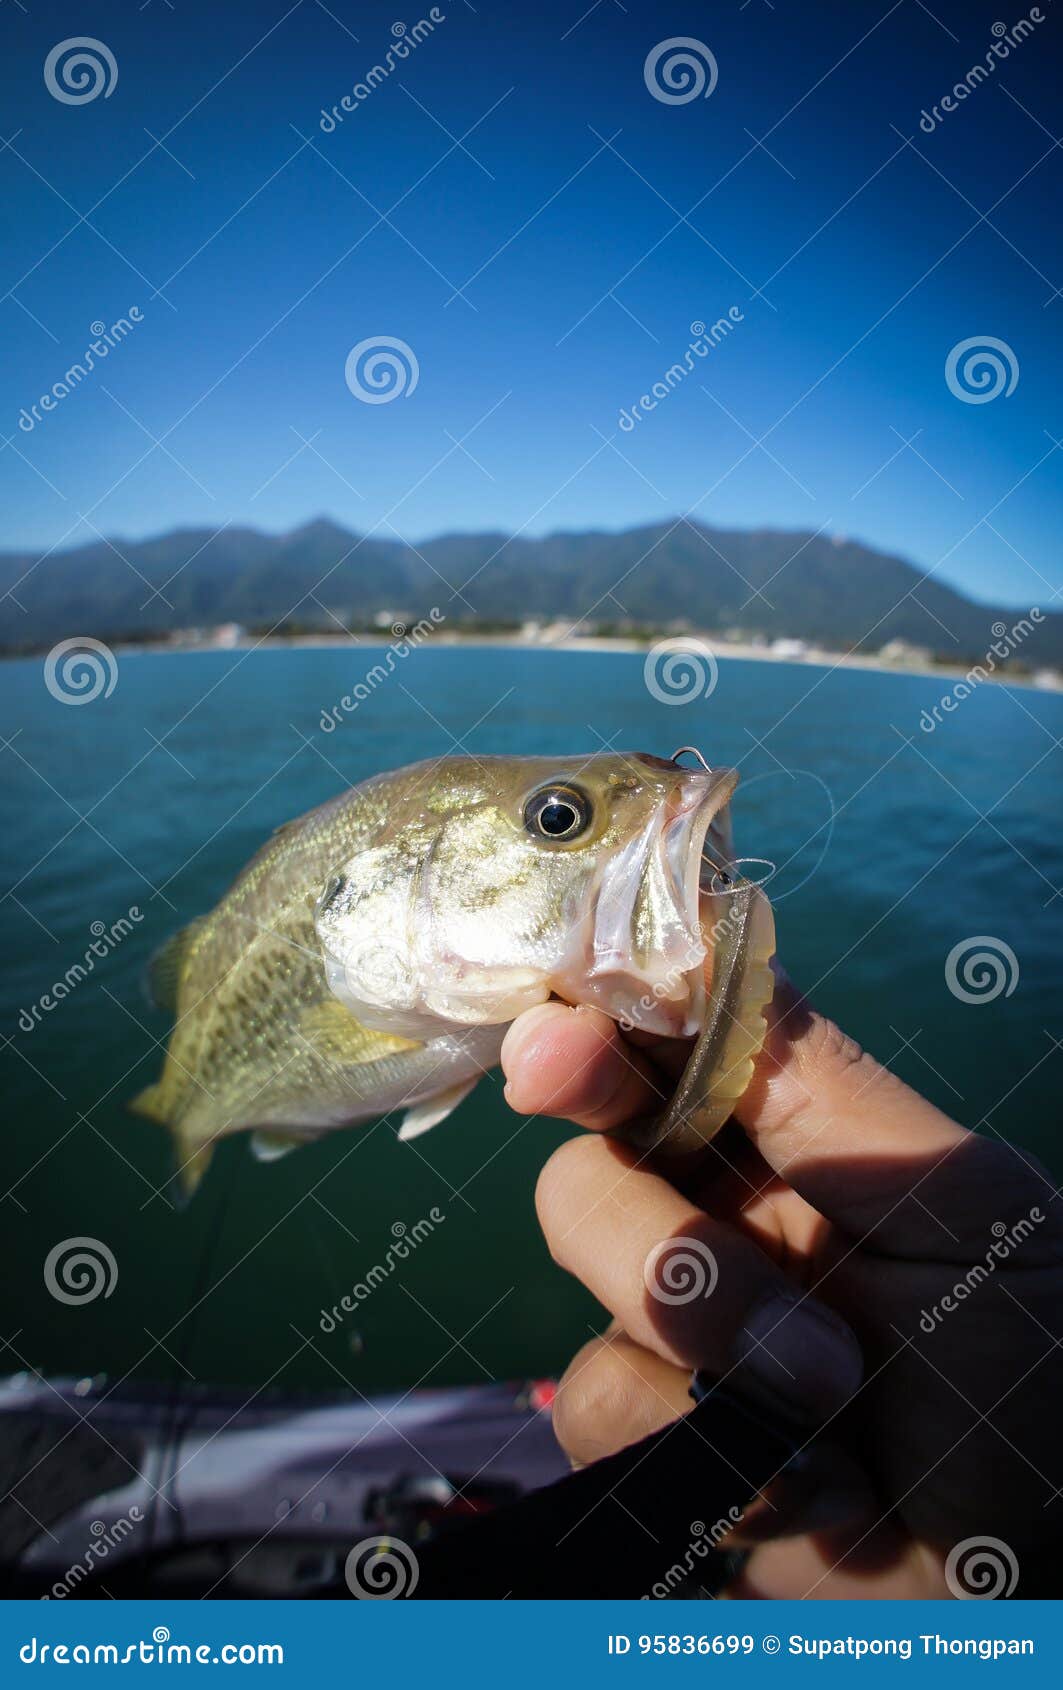 Baby bass stock image. Image of fishing, bass, fish, baby - 95836699